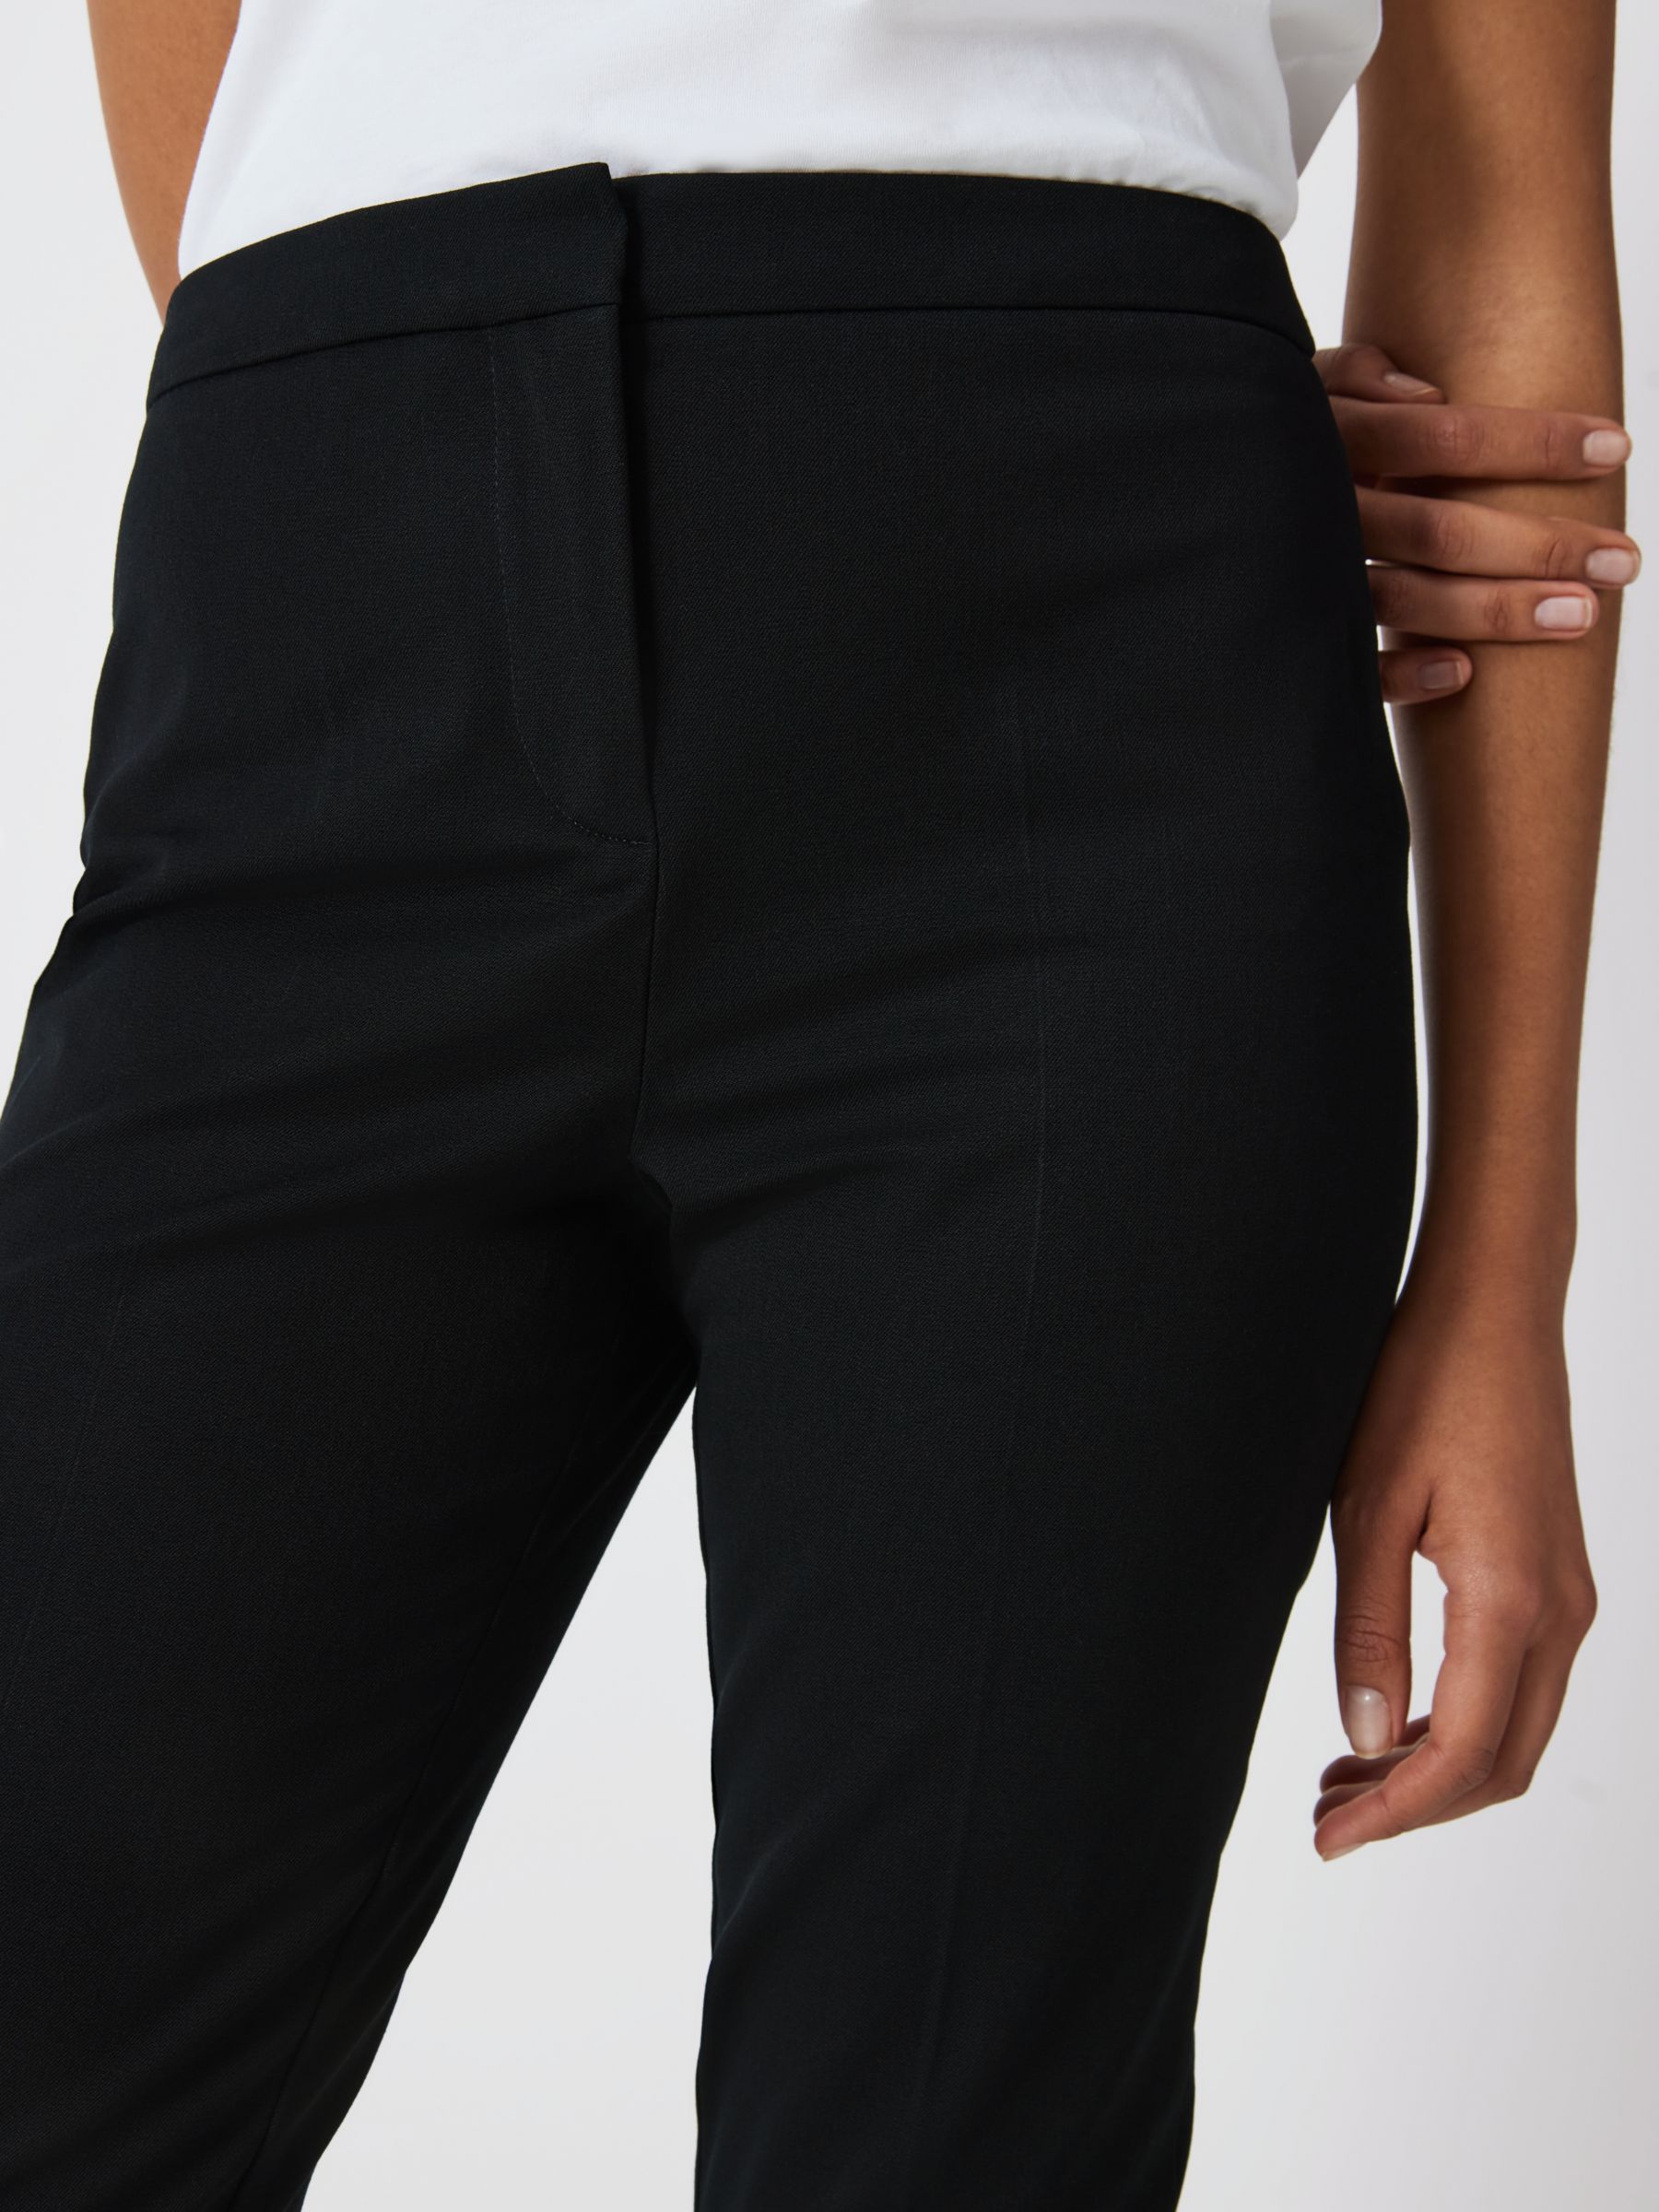 John Lewis Slim Bi-Stretch Trousers, Black, 8